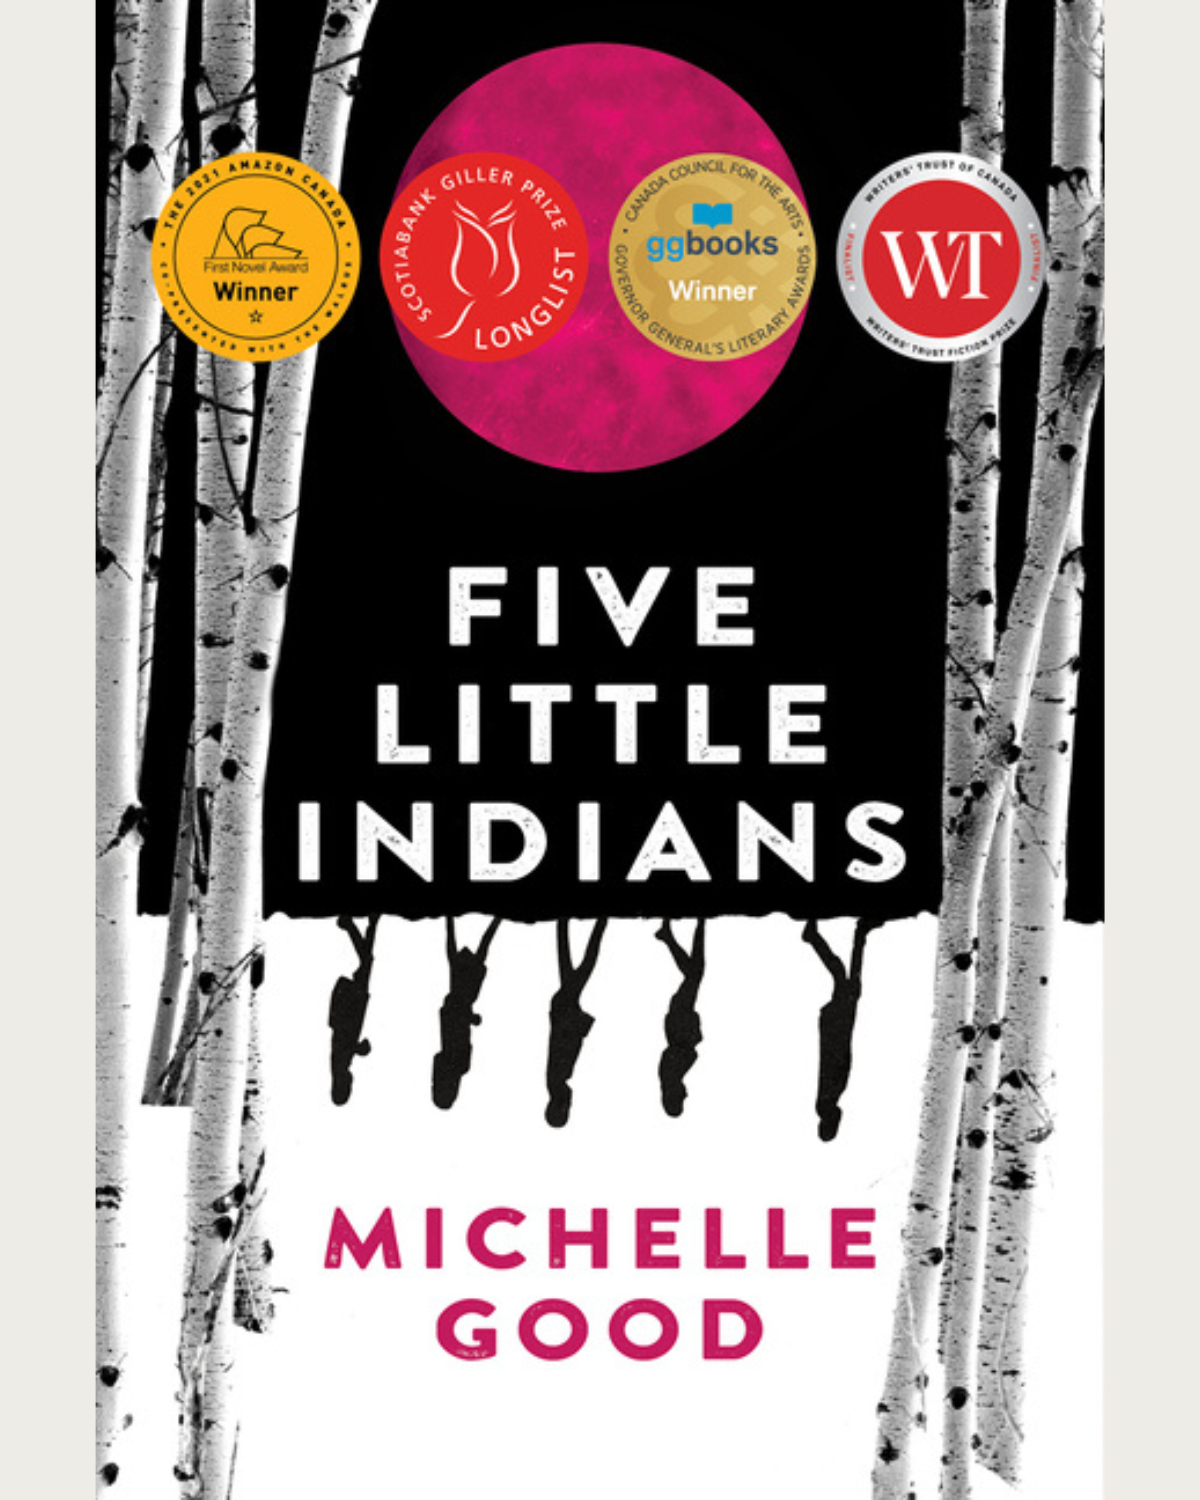 Five little indians by Michelle good